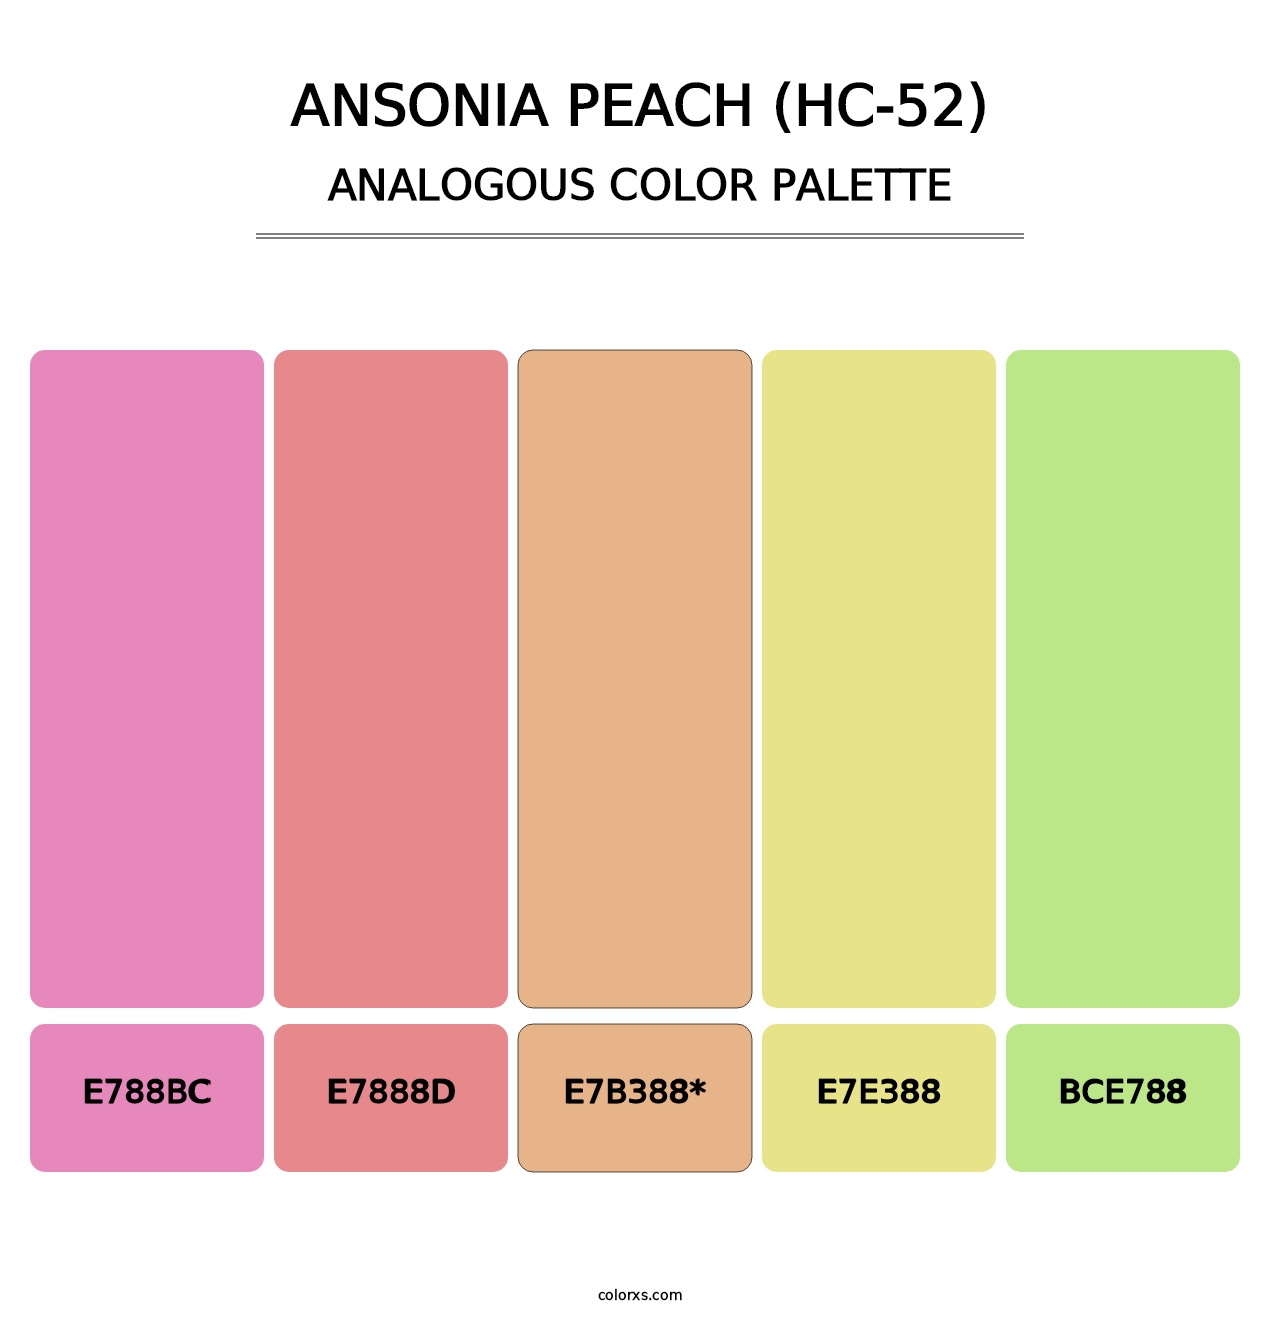 Ansonia Peach (HC-52) - Analogous Color Palette